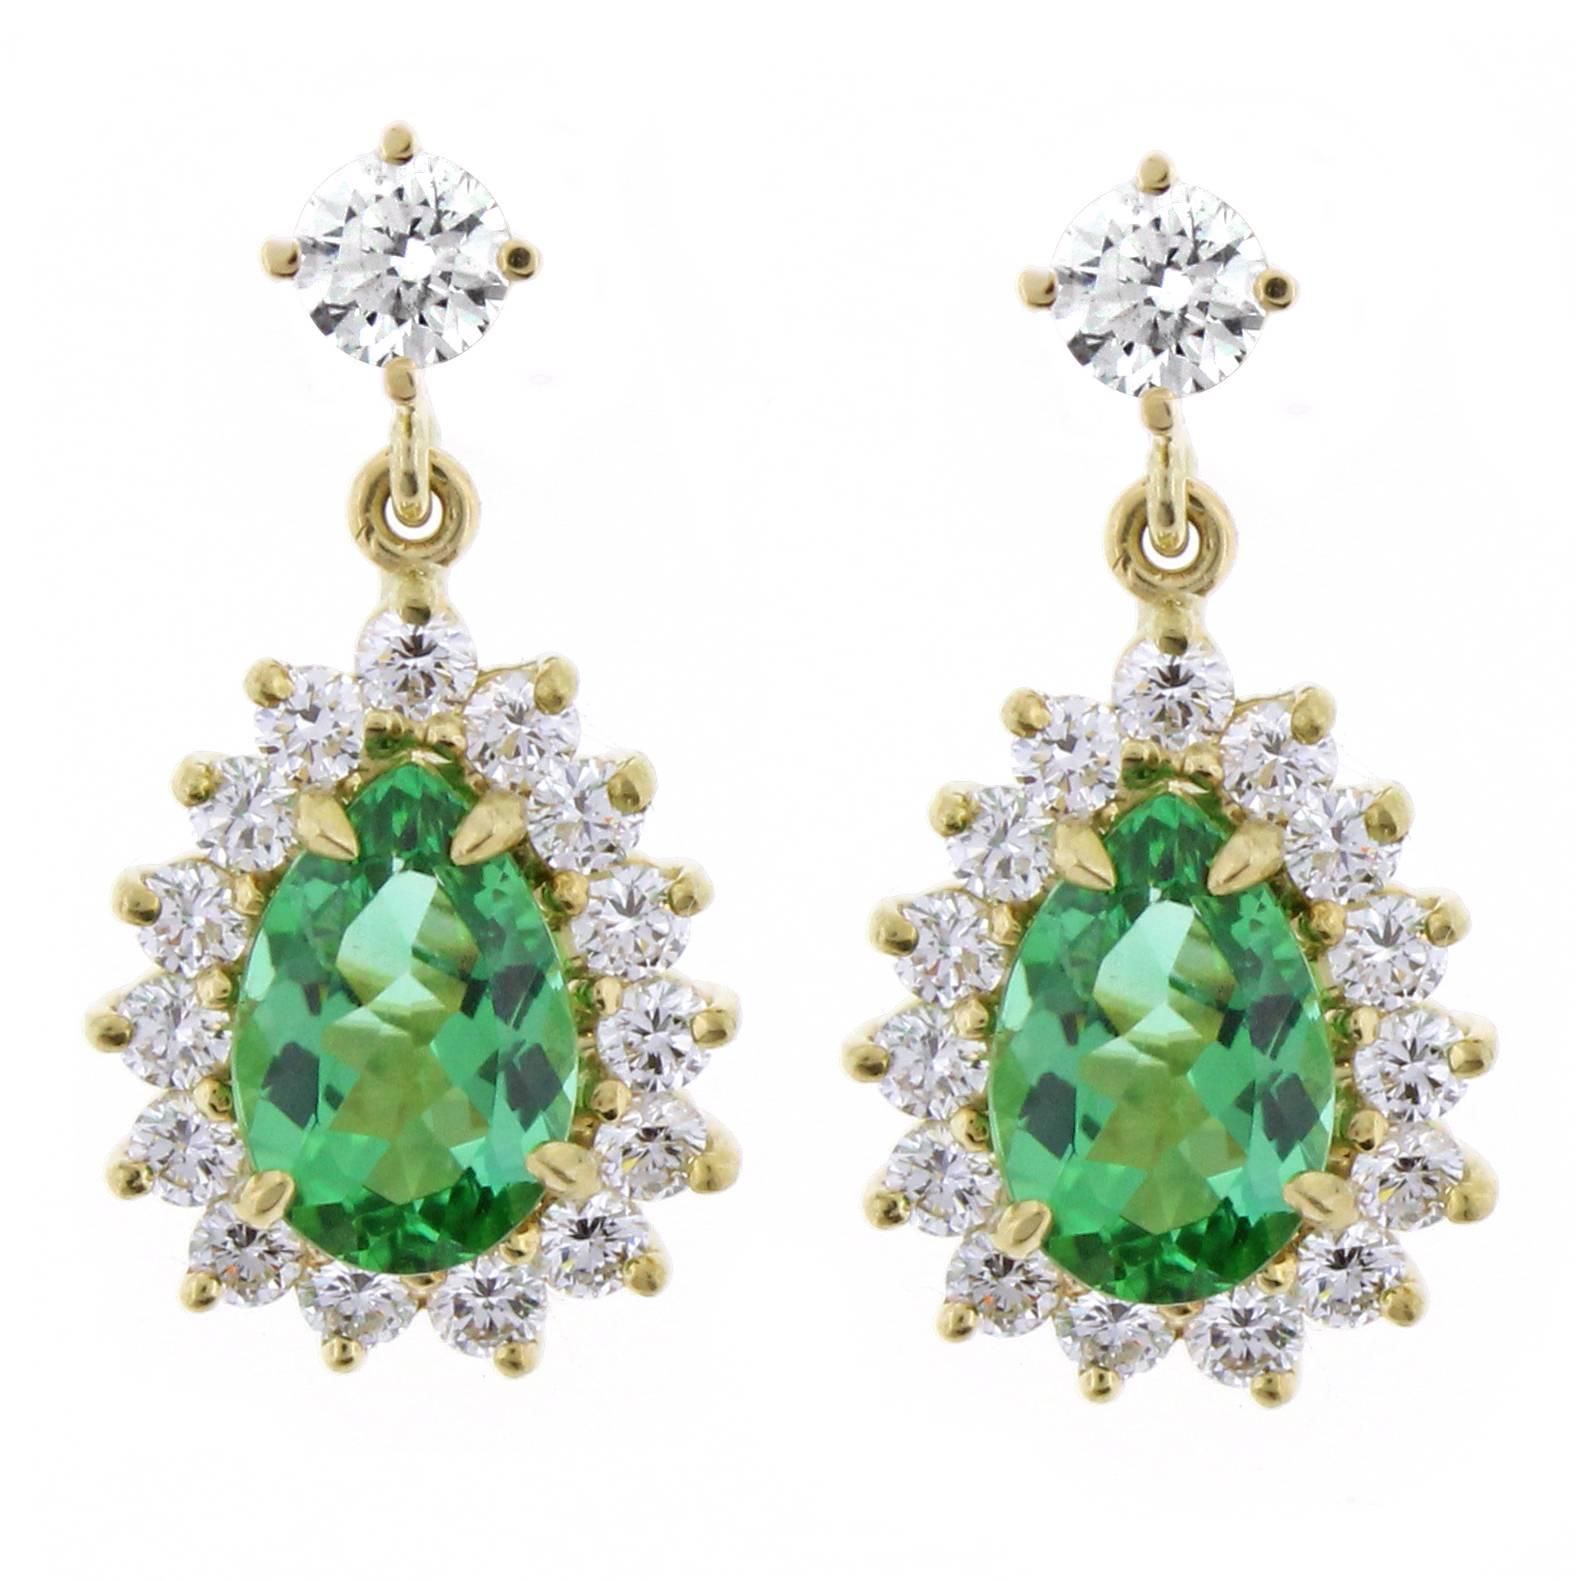 Tiffany & Co. Brazilian Paraiba tourmaline Diamond Gold Earrings 